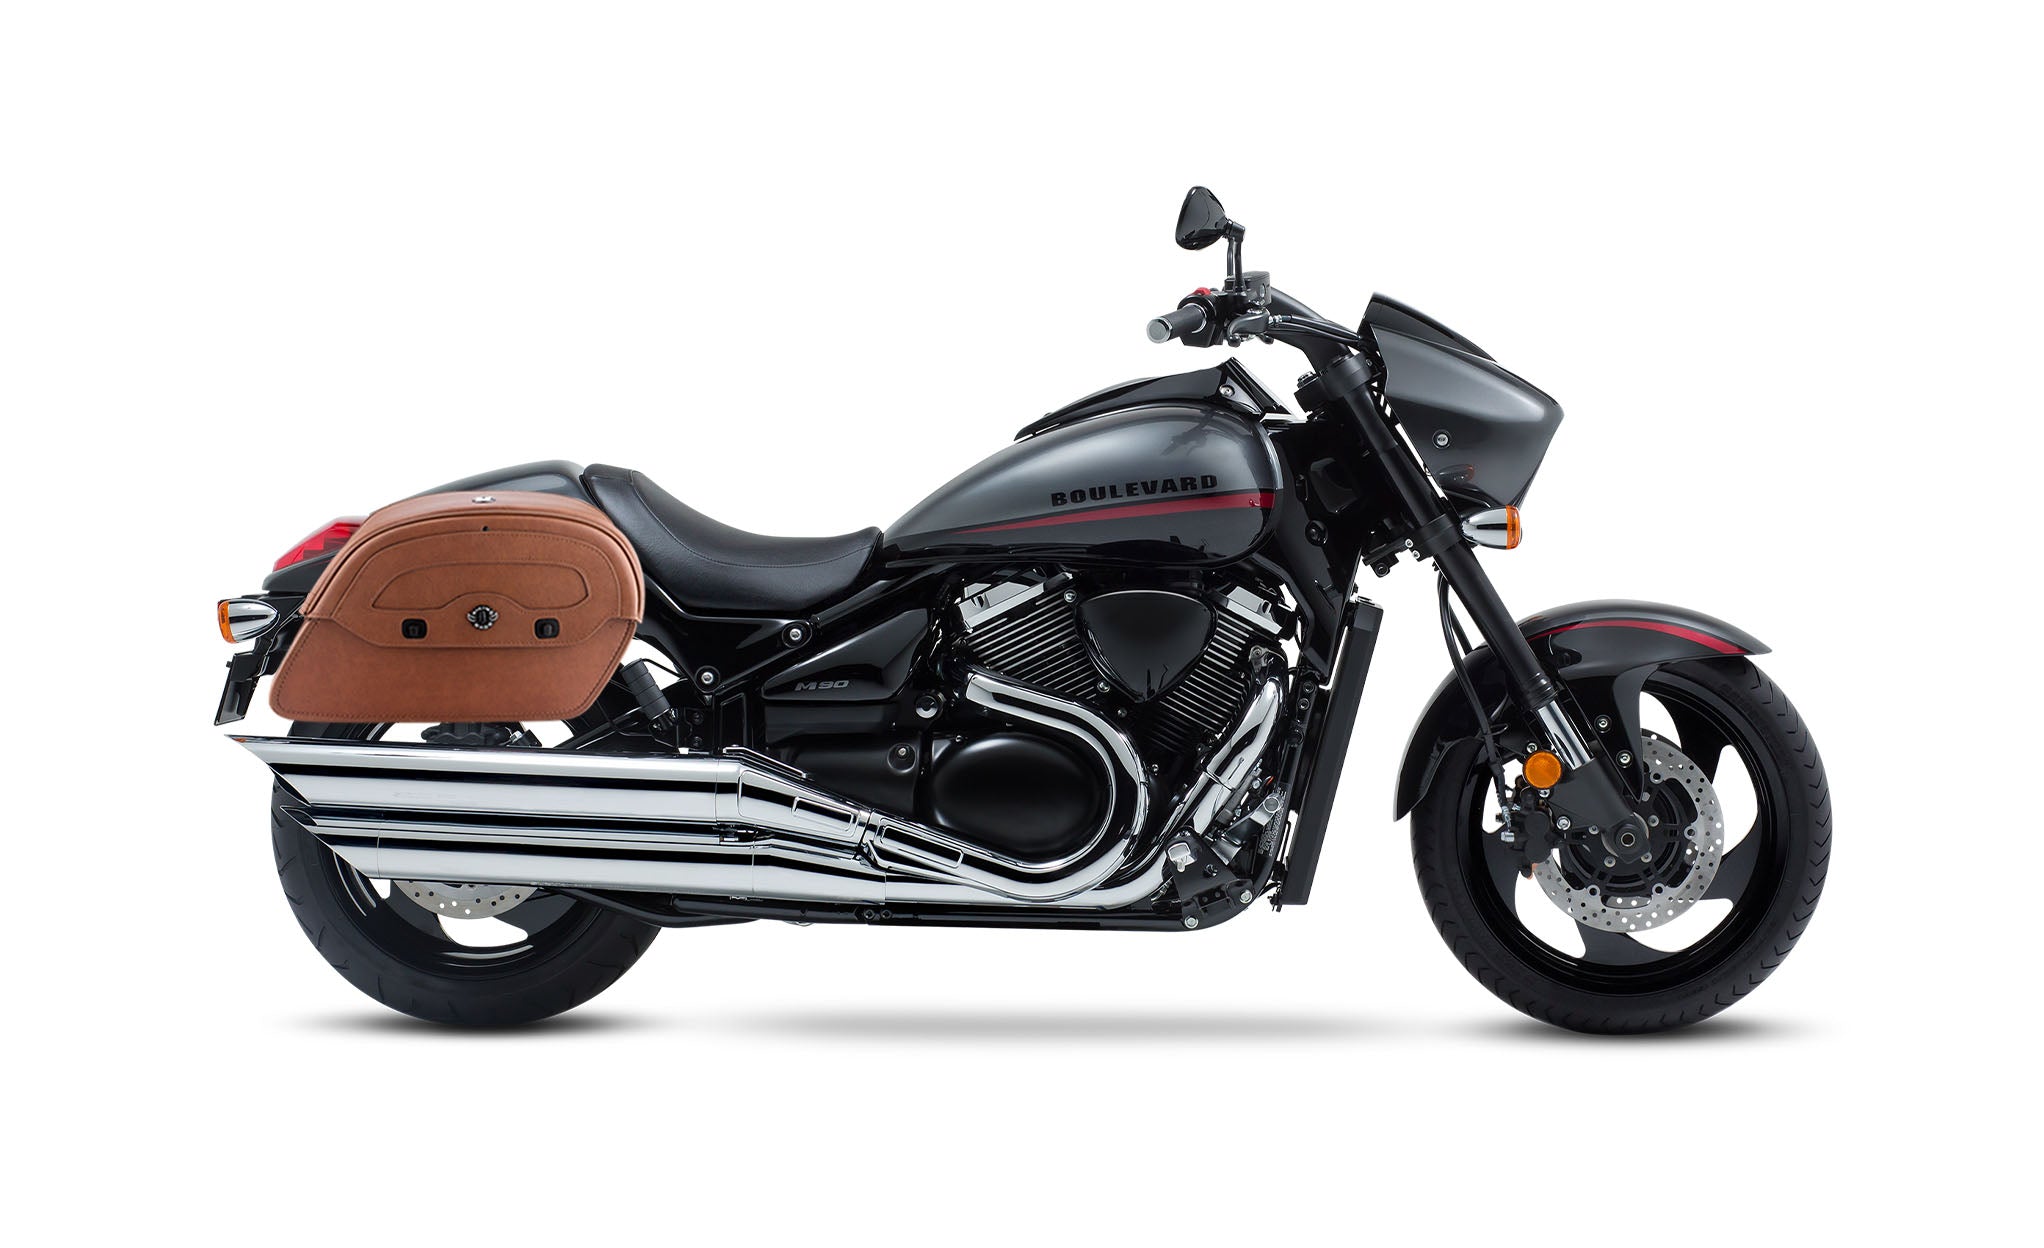 Viking Warrior Brown Large Suzuki Boulevard M90 Vz1500 Leather Motorcycle Saddlebags on Bike Photo @expand